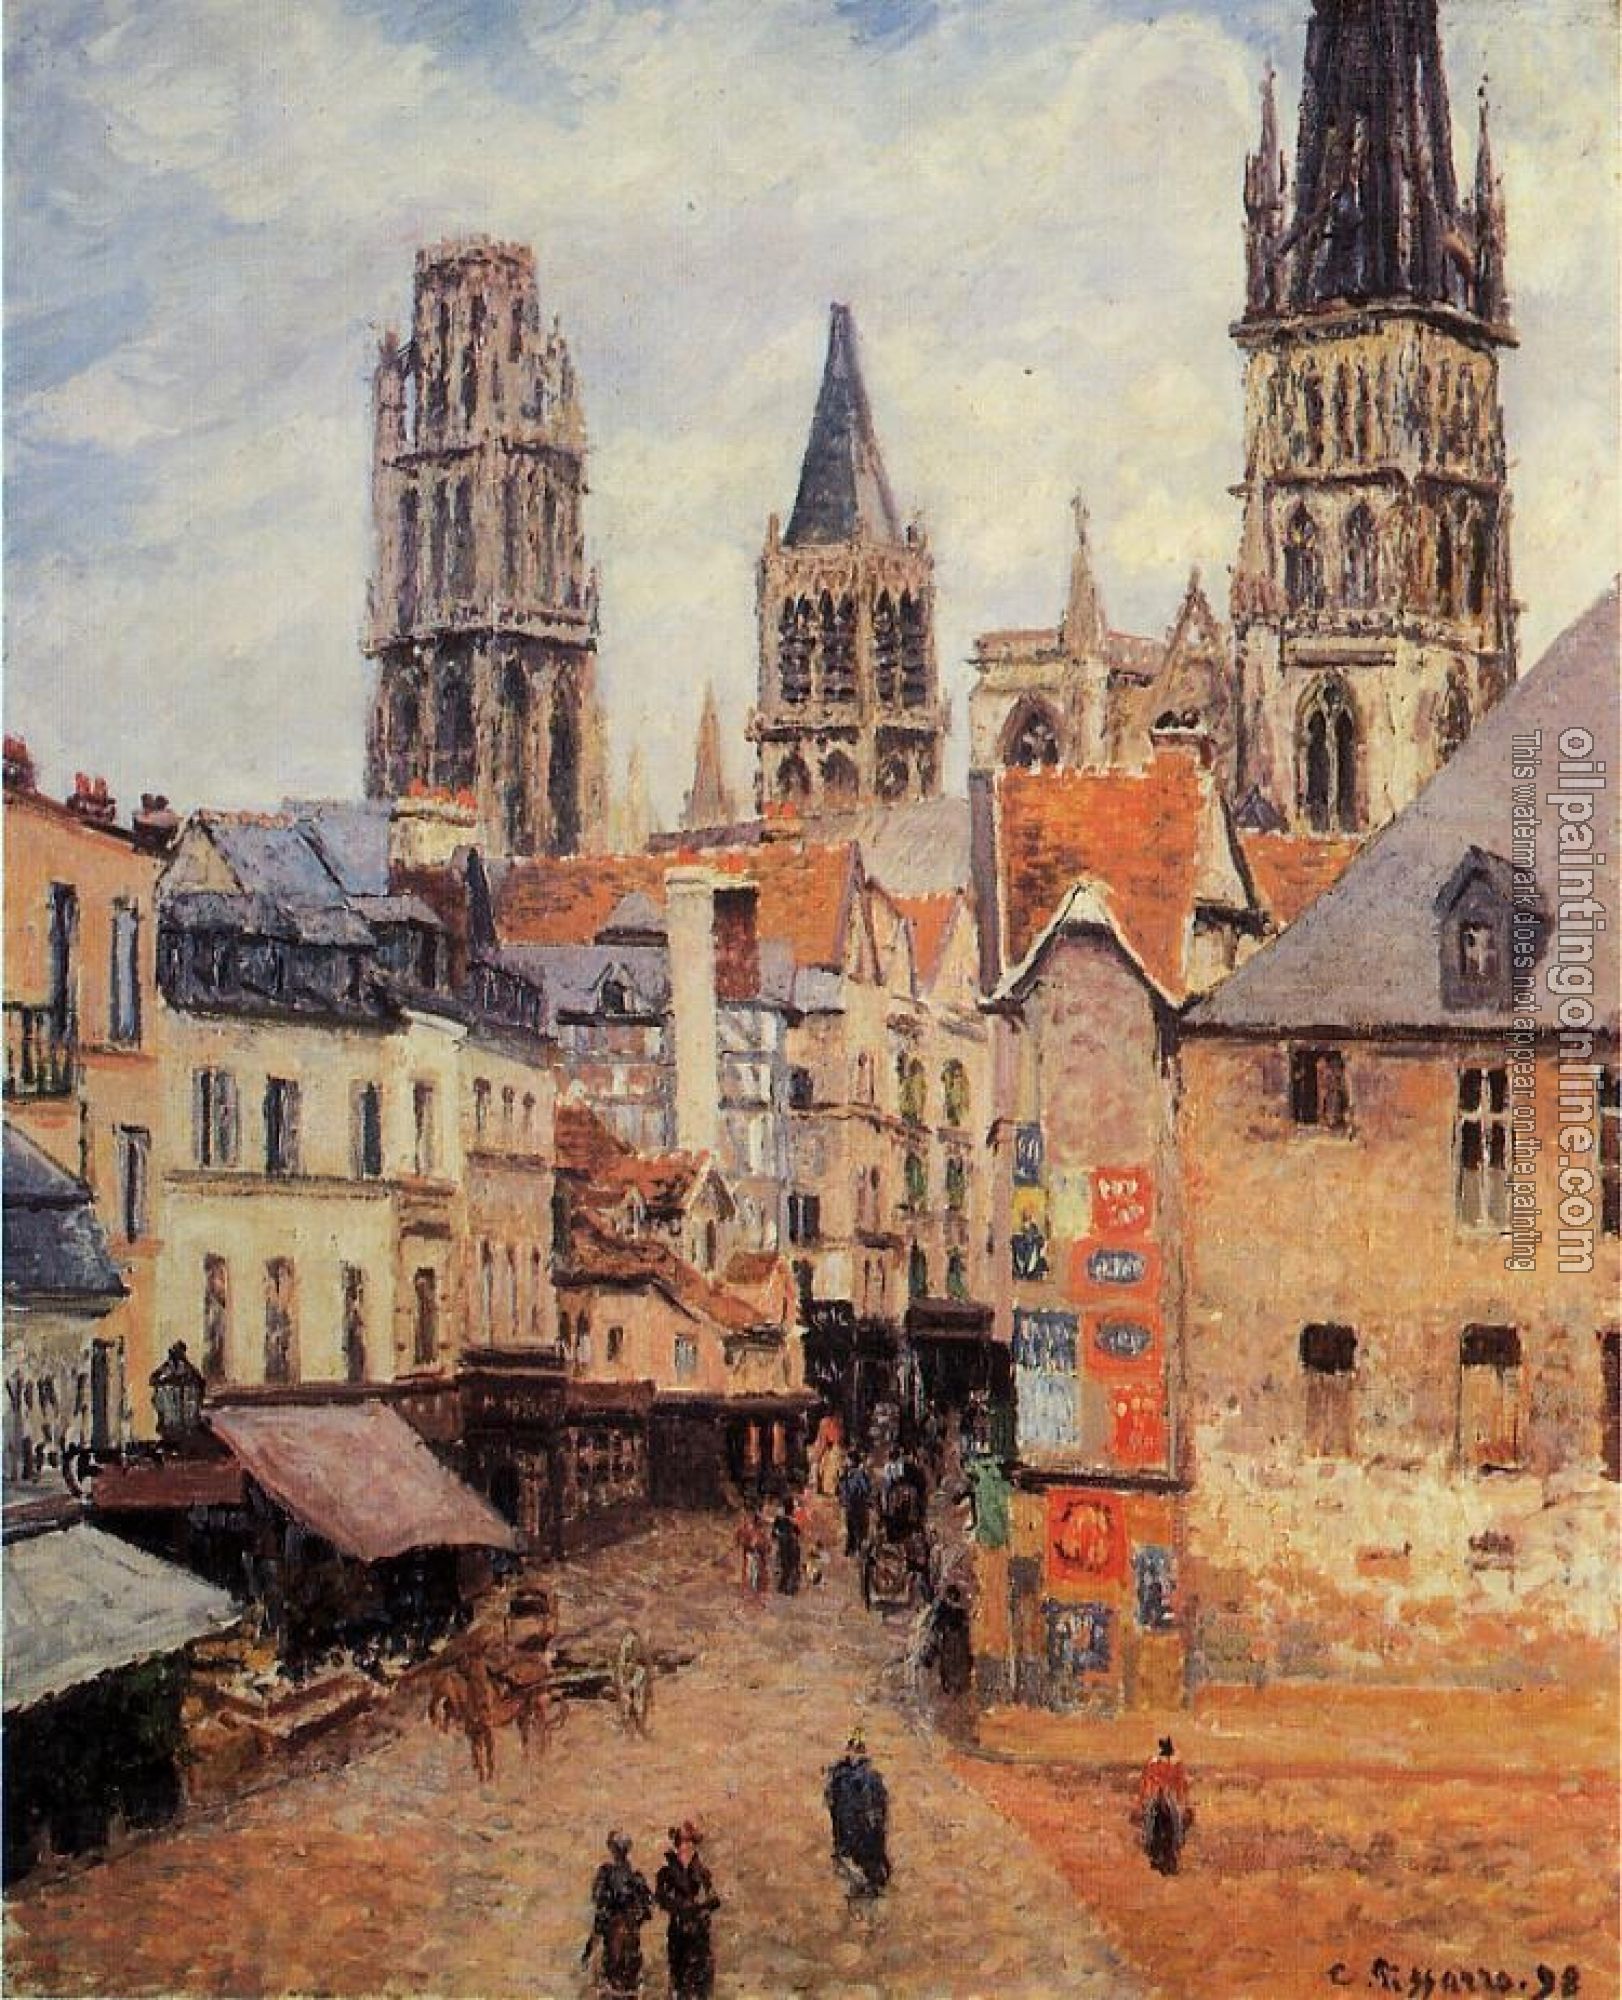 Pissarro, Camille - Rue de l'Eppicerie, Rouen - Morning, Grey Weather